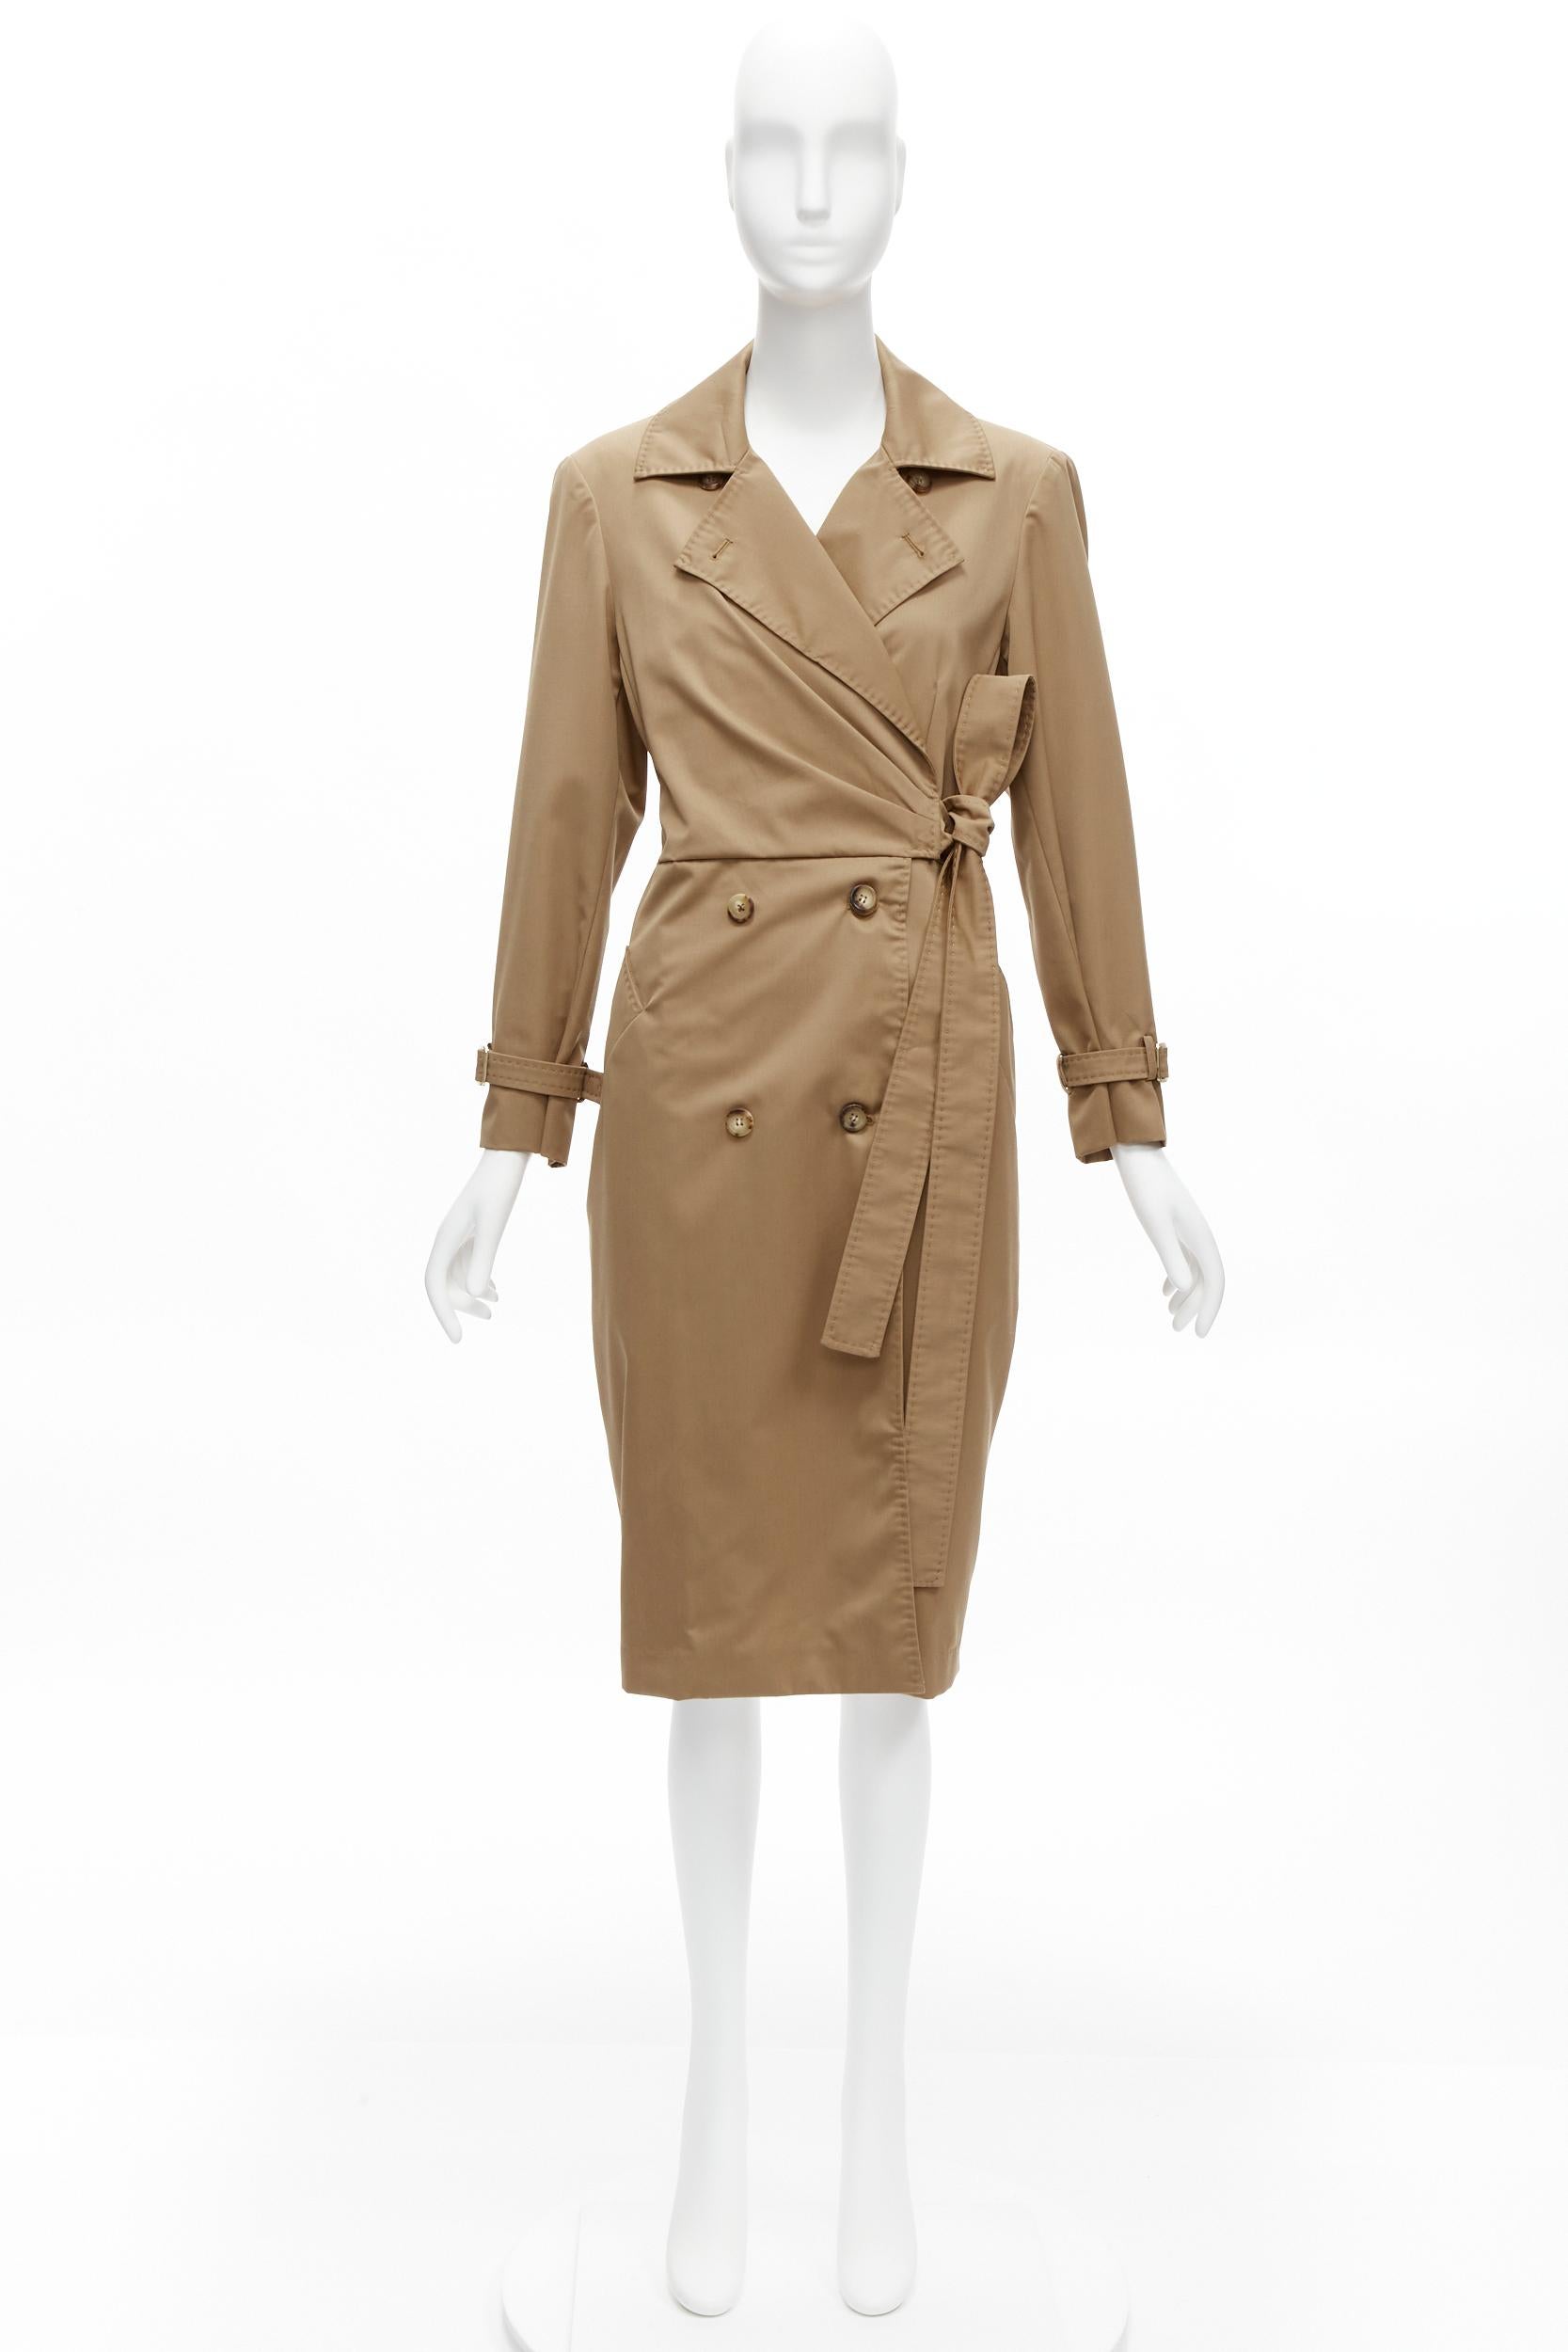 MAX MARA 100% virgin wool tan wrap tie trench coat dress IT42 M For Sale 5